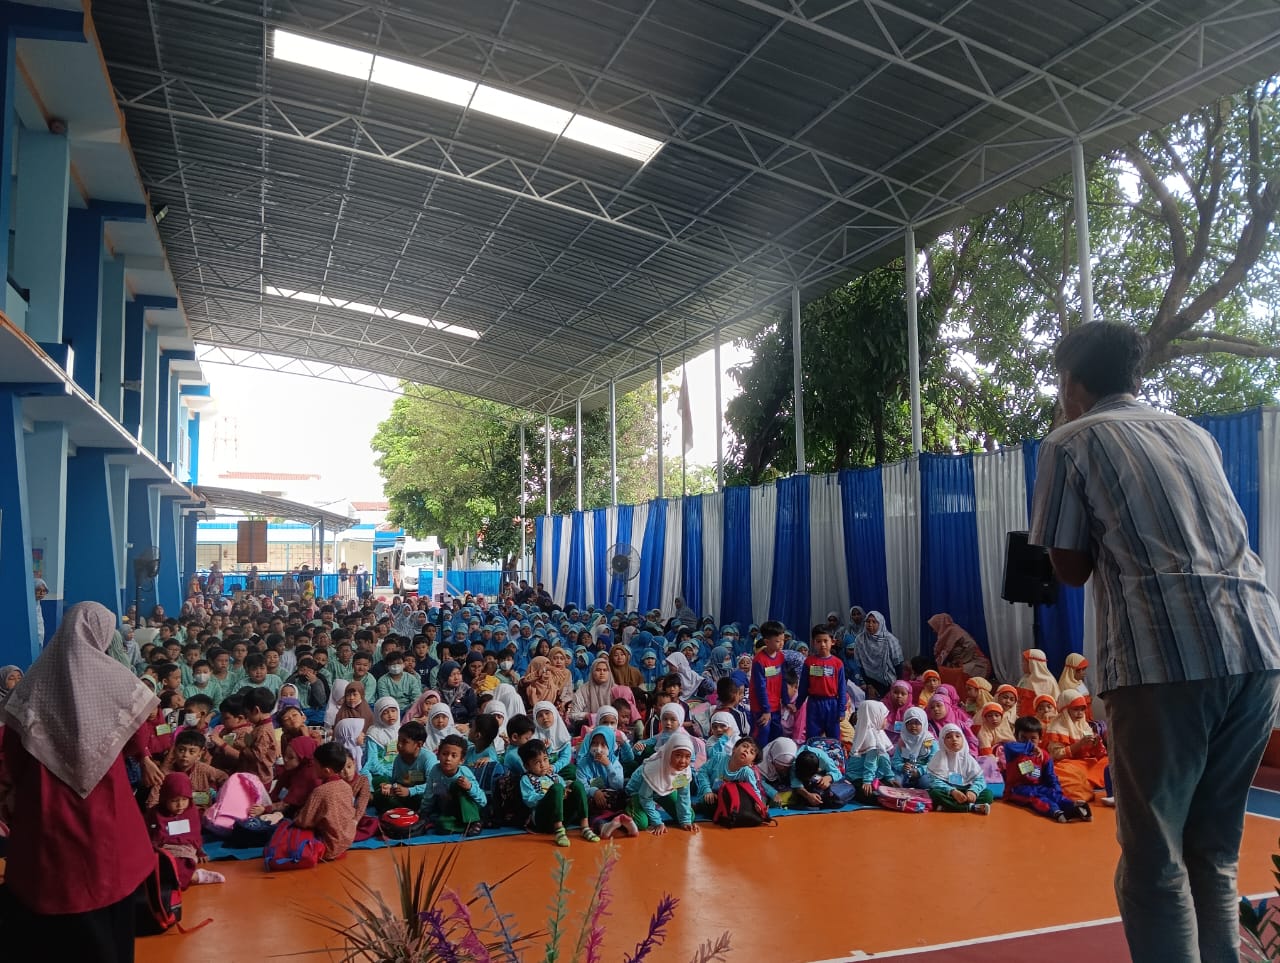 Wisata LiterAsyik Ke SDS Mentari Ar-Ridho Islamic School